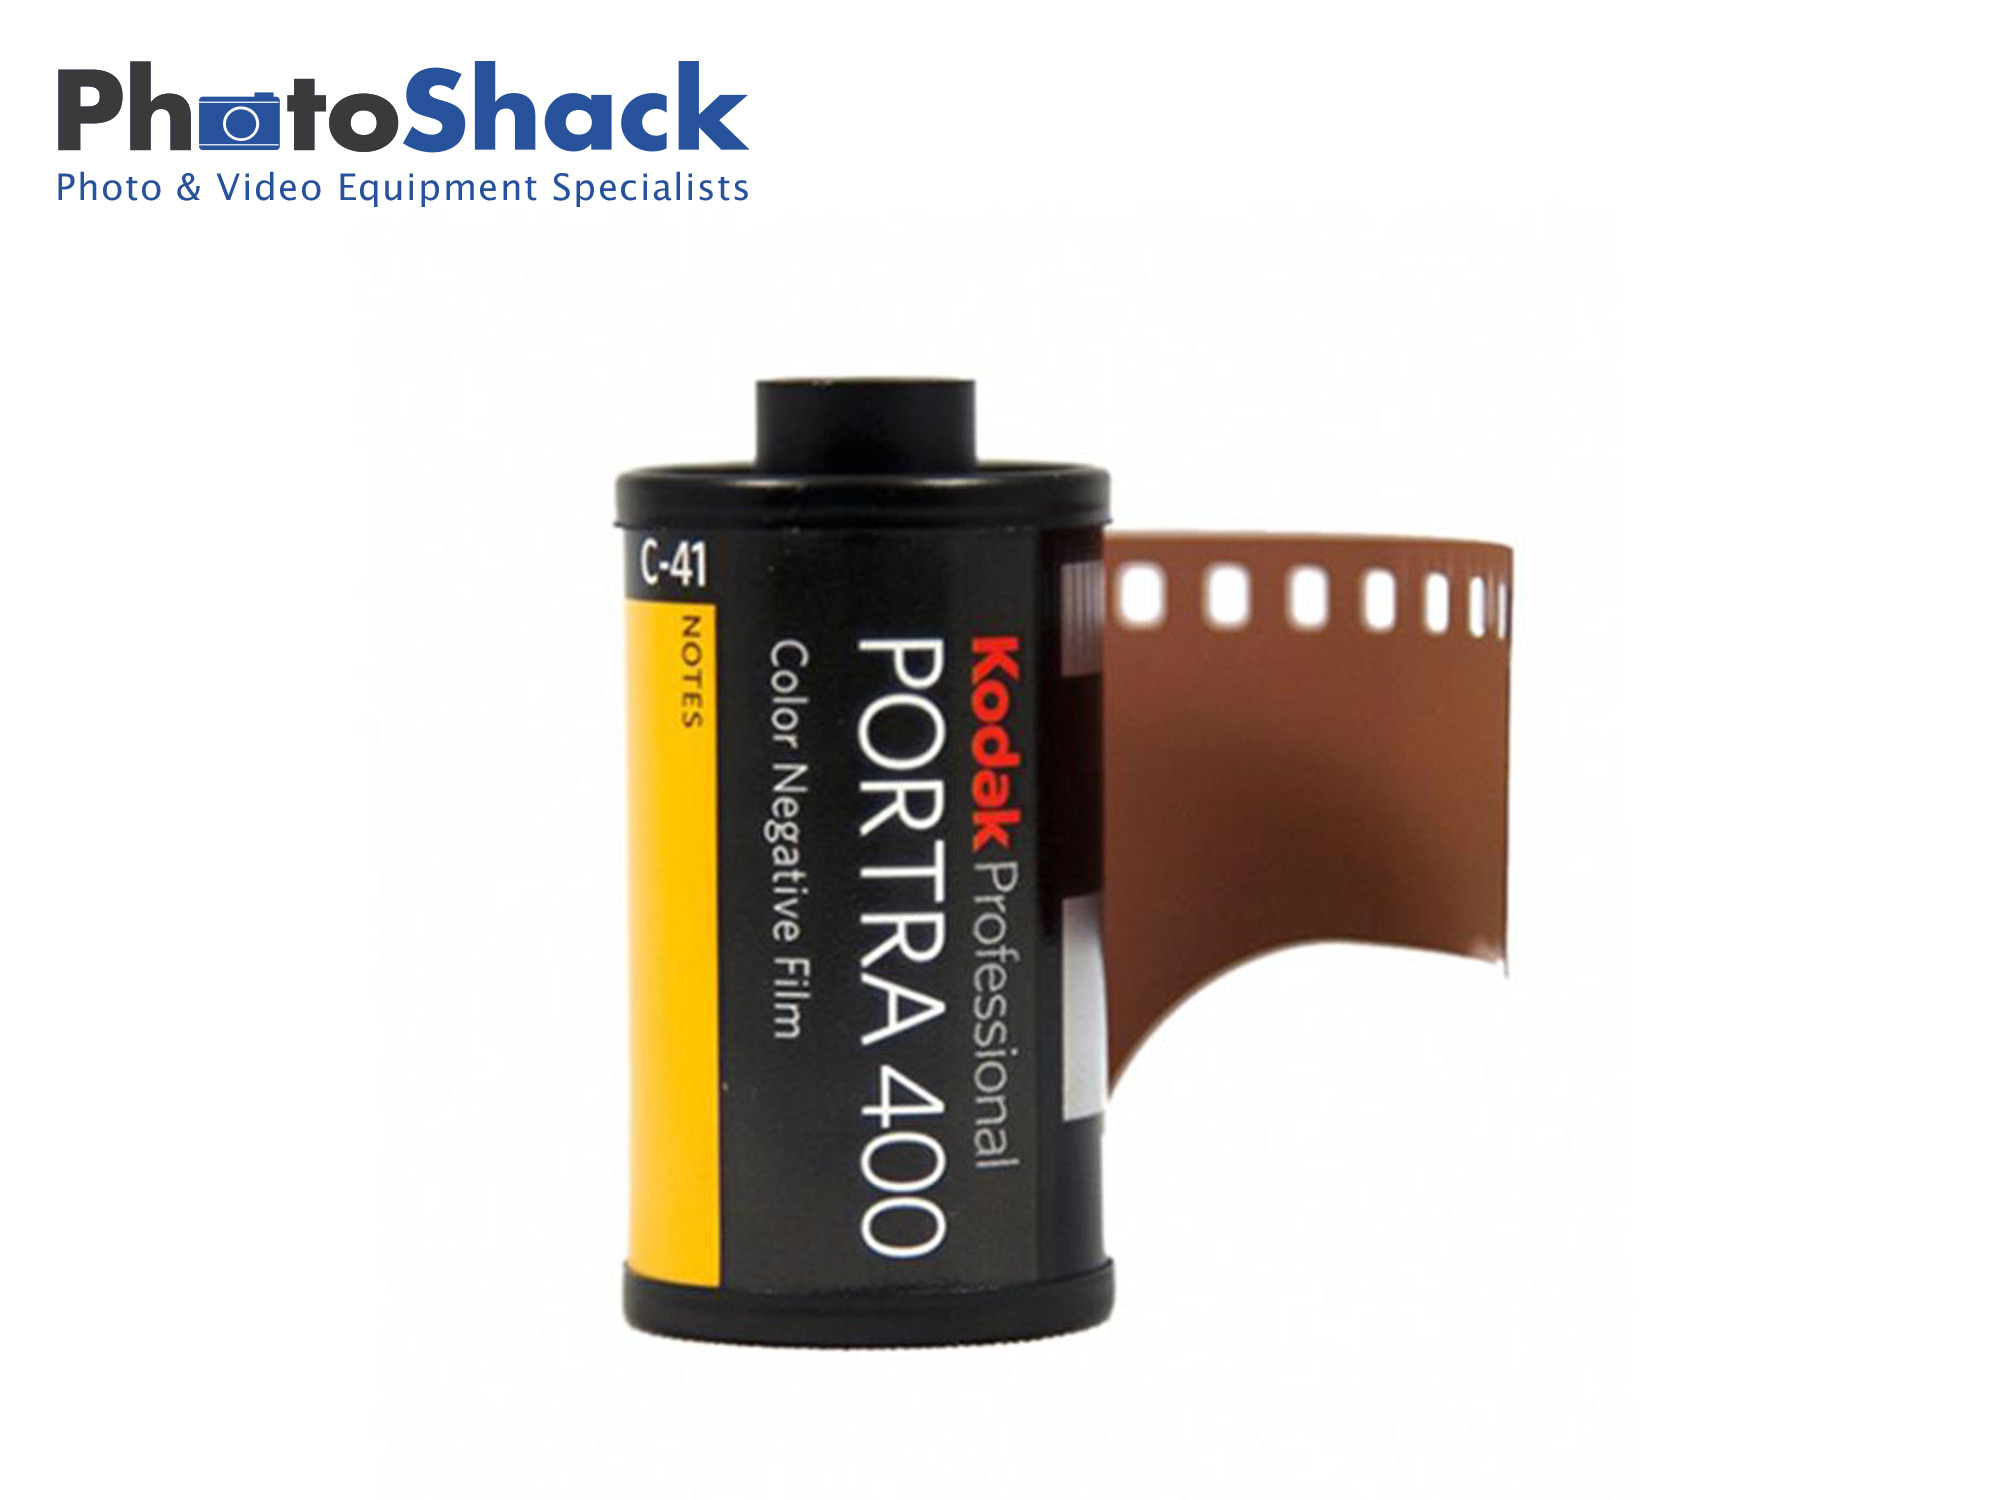 Kodak Portra 400 1 roll (No Box)